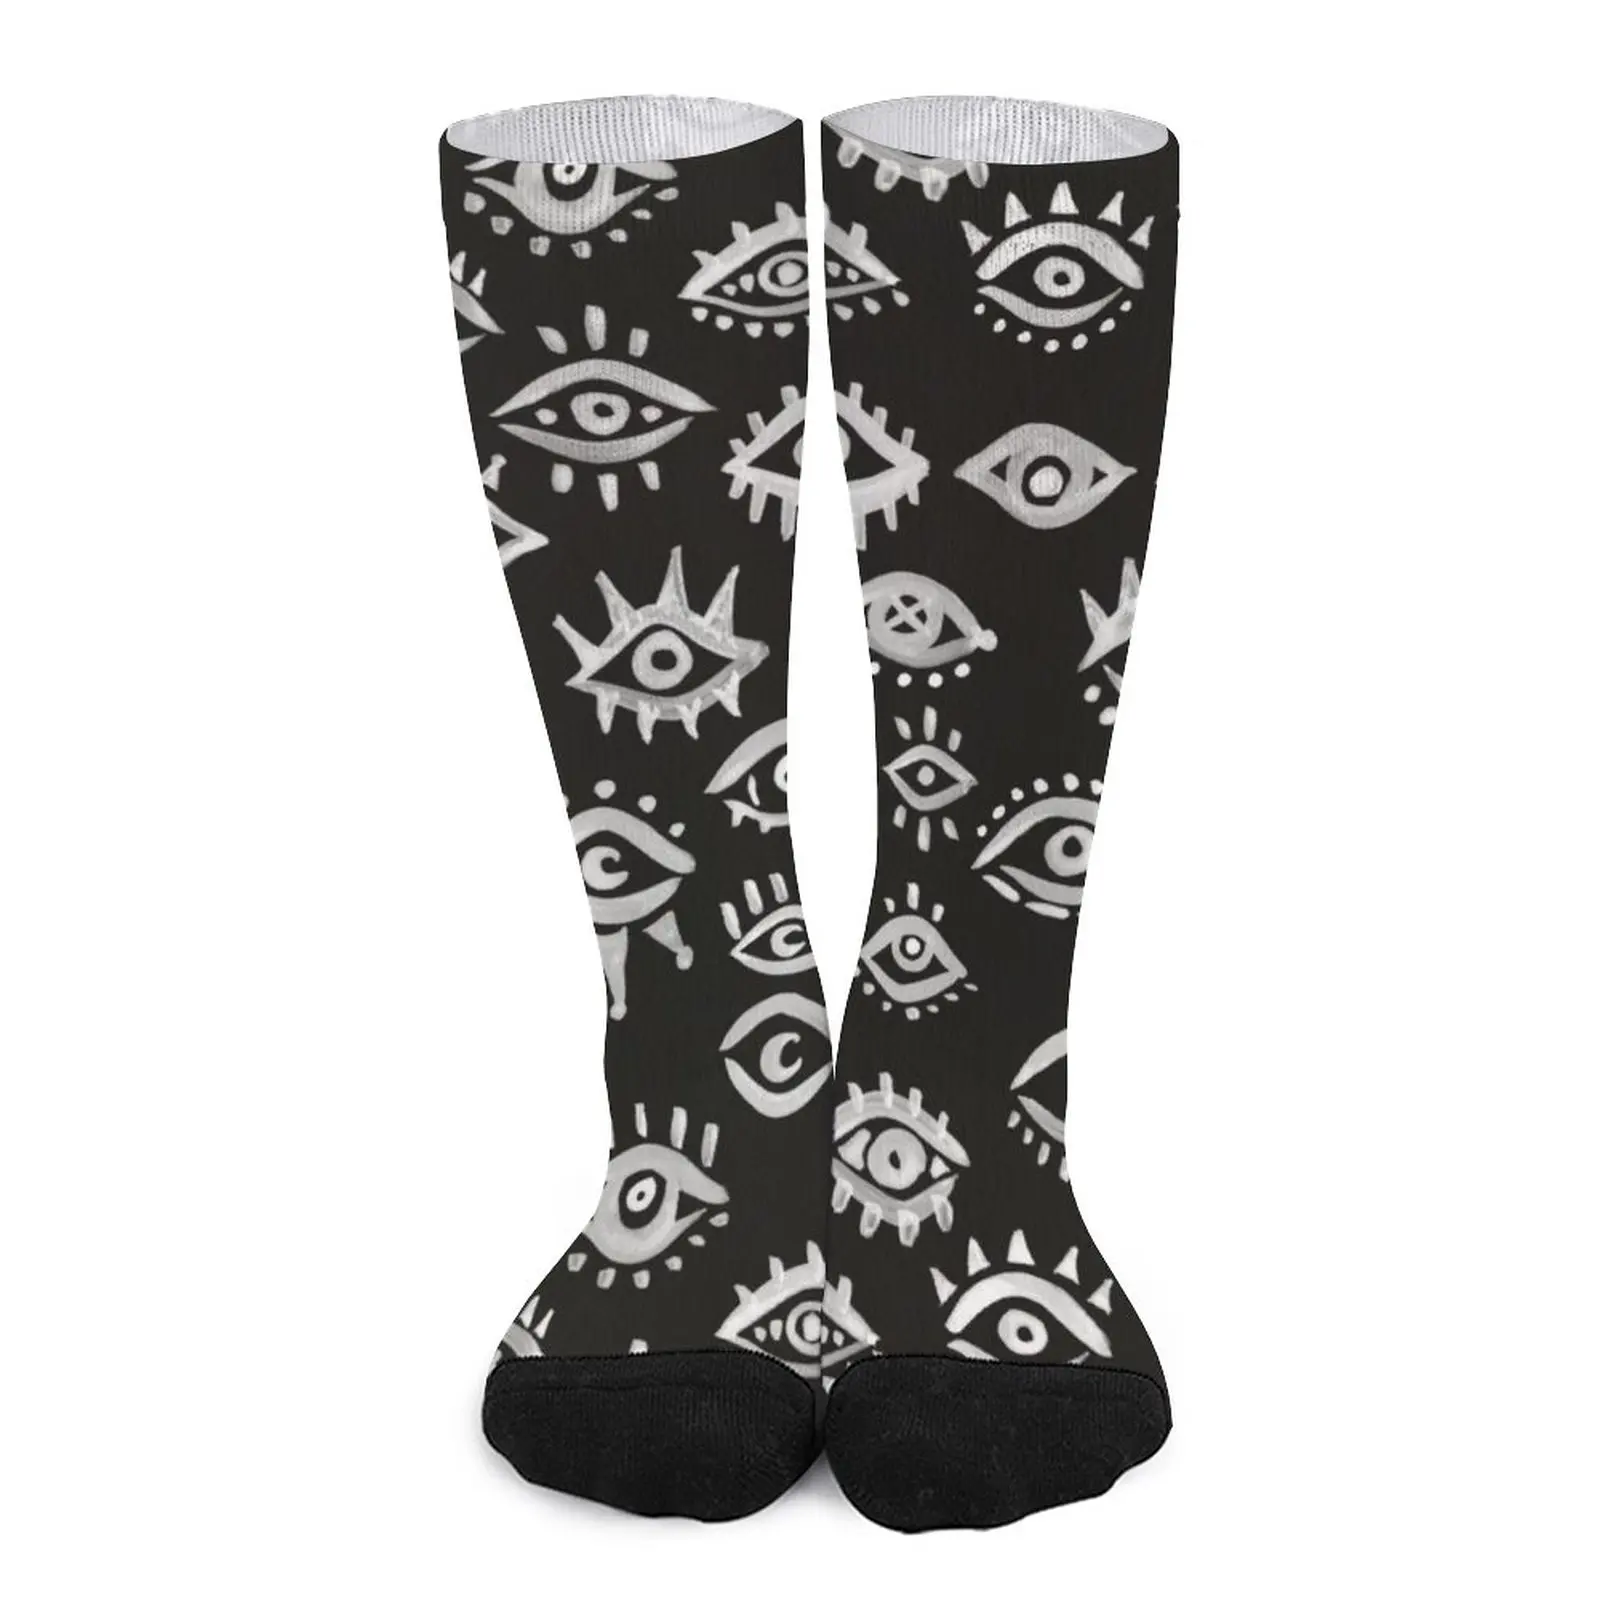 Mystic Eyes – White on Black Socks hiking golf basketball Heating sock h blockx fly eyes 1 cd